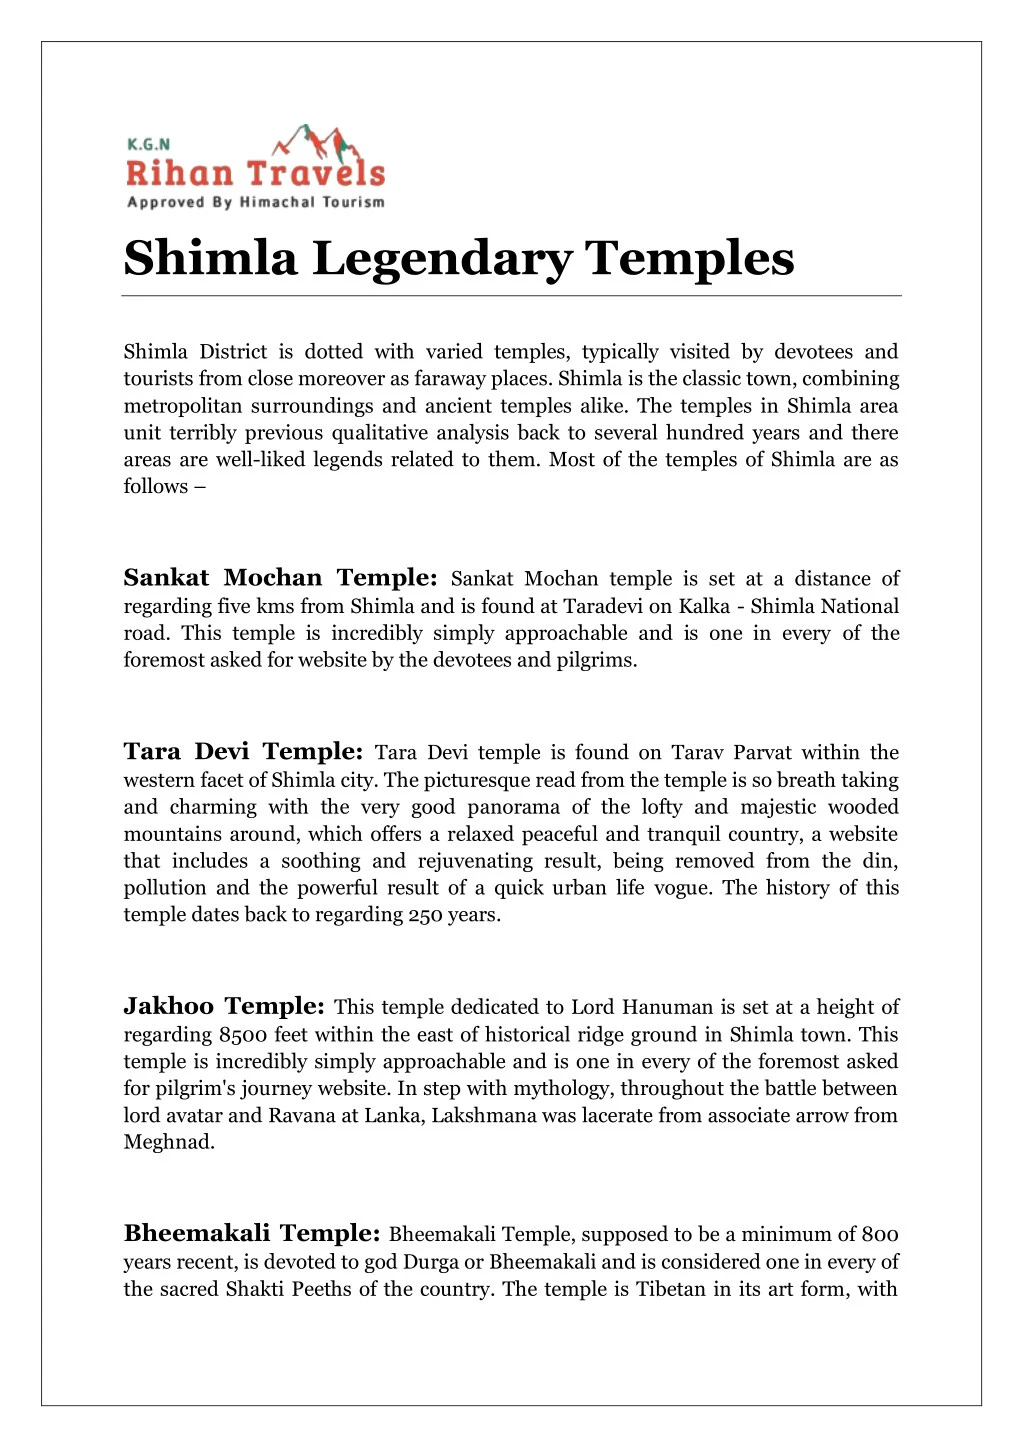 shimla legendary temples